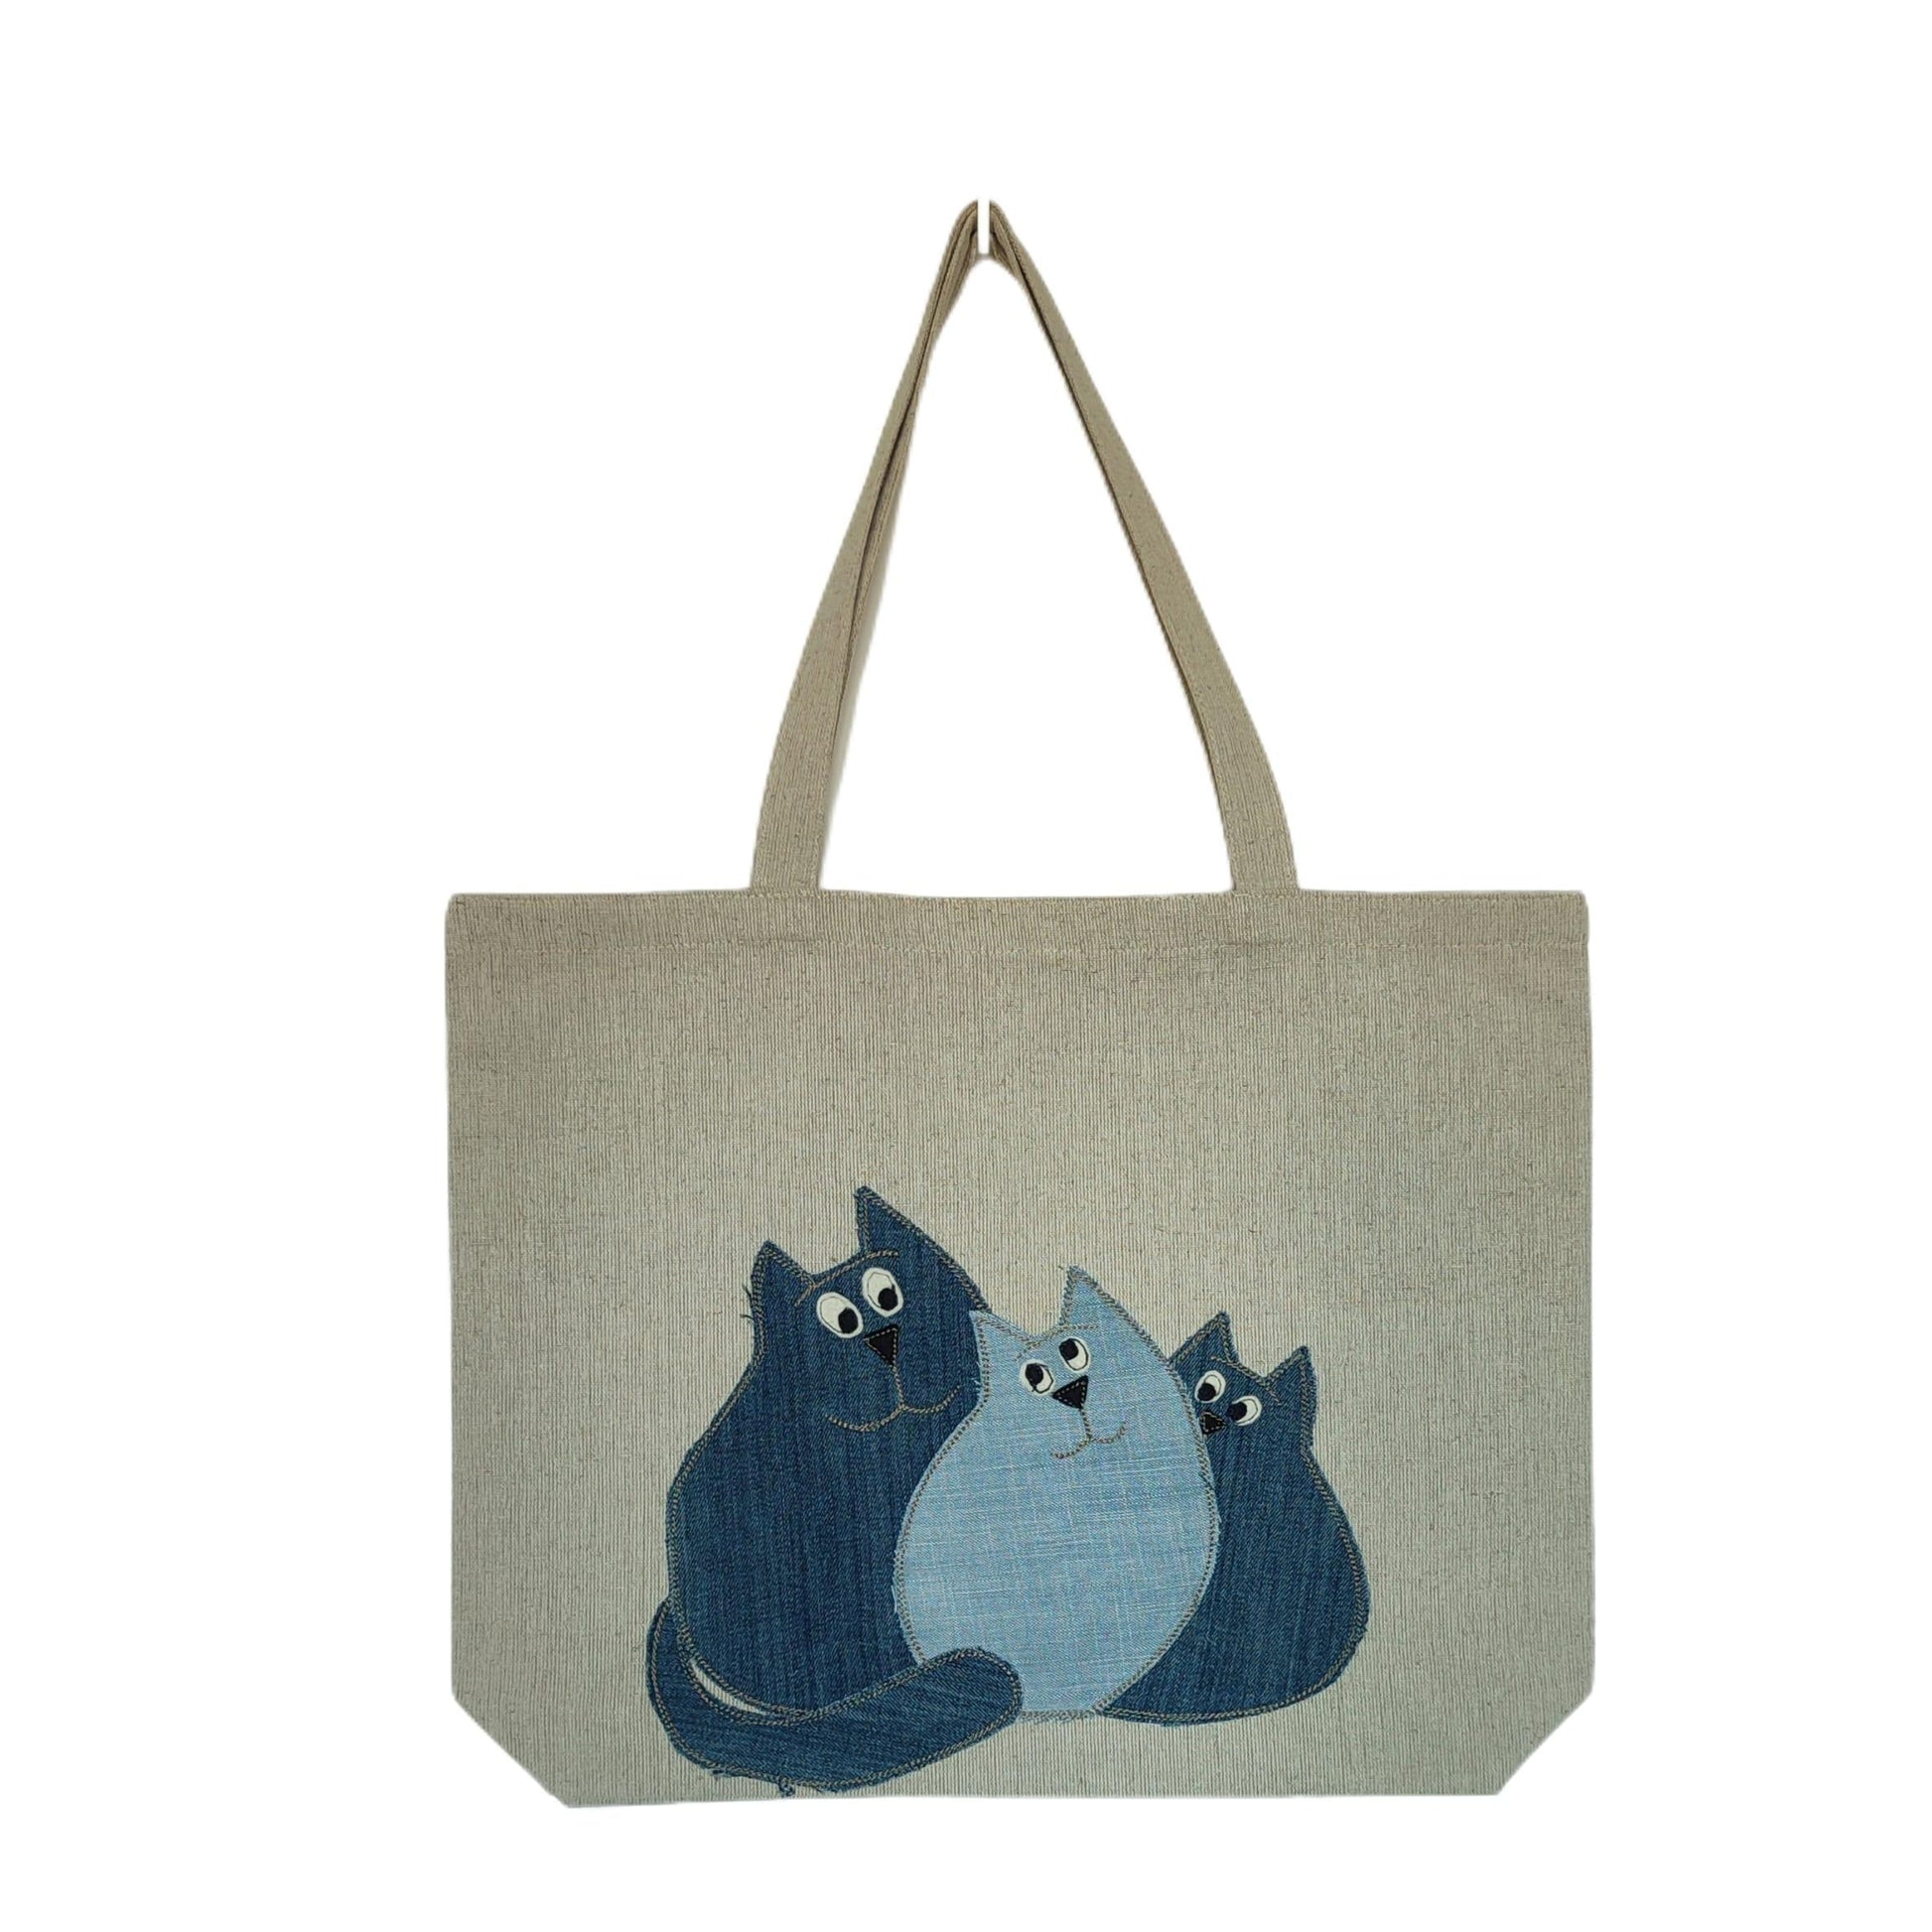 Big shopping bag THREE CATS - Linen4me